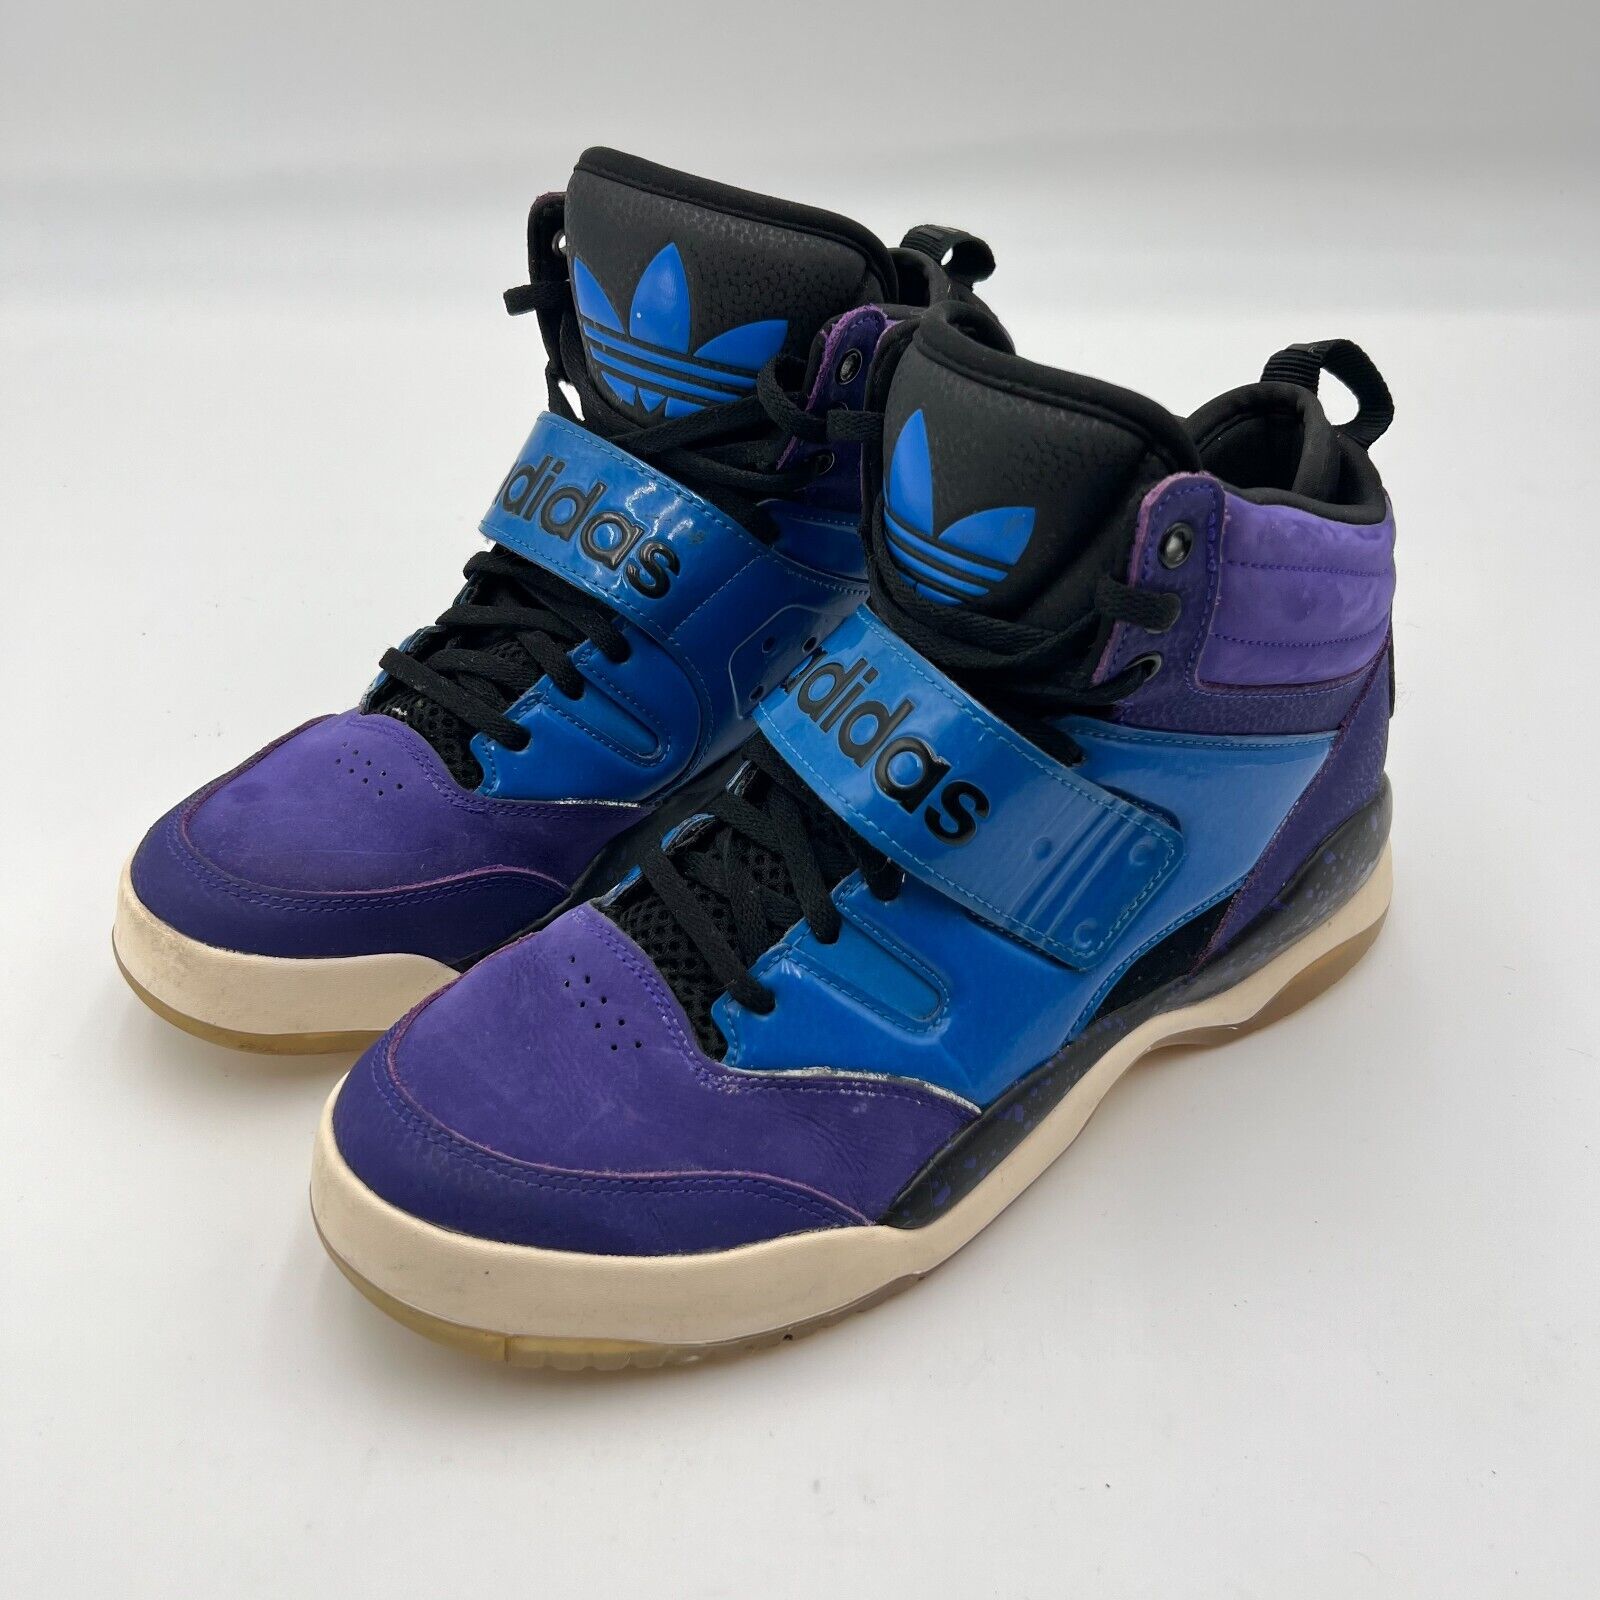 Adidas Originals Hackmore Athletic Shoe Mens Size 10 Purple Blue Black Strap